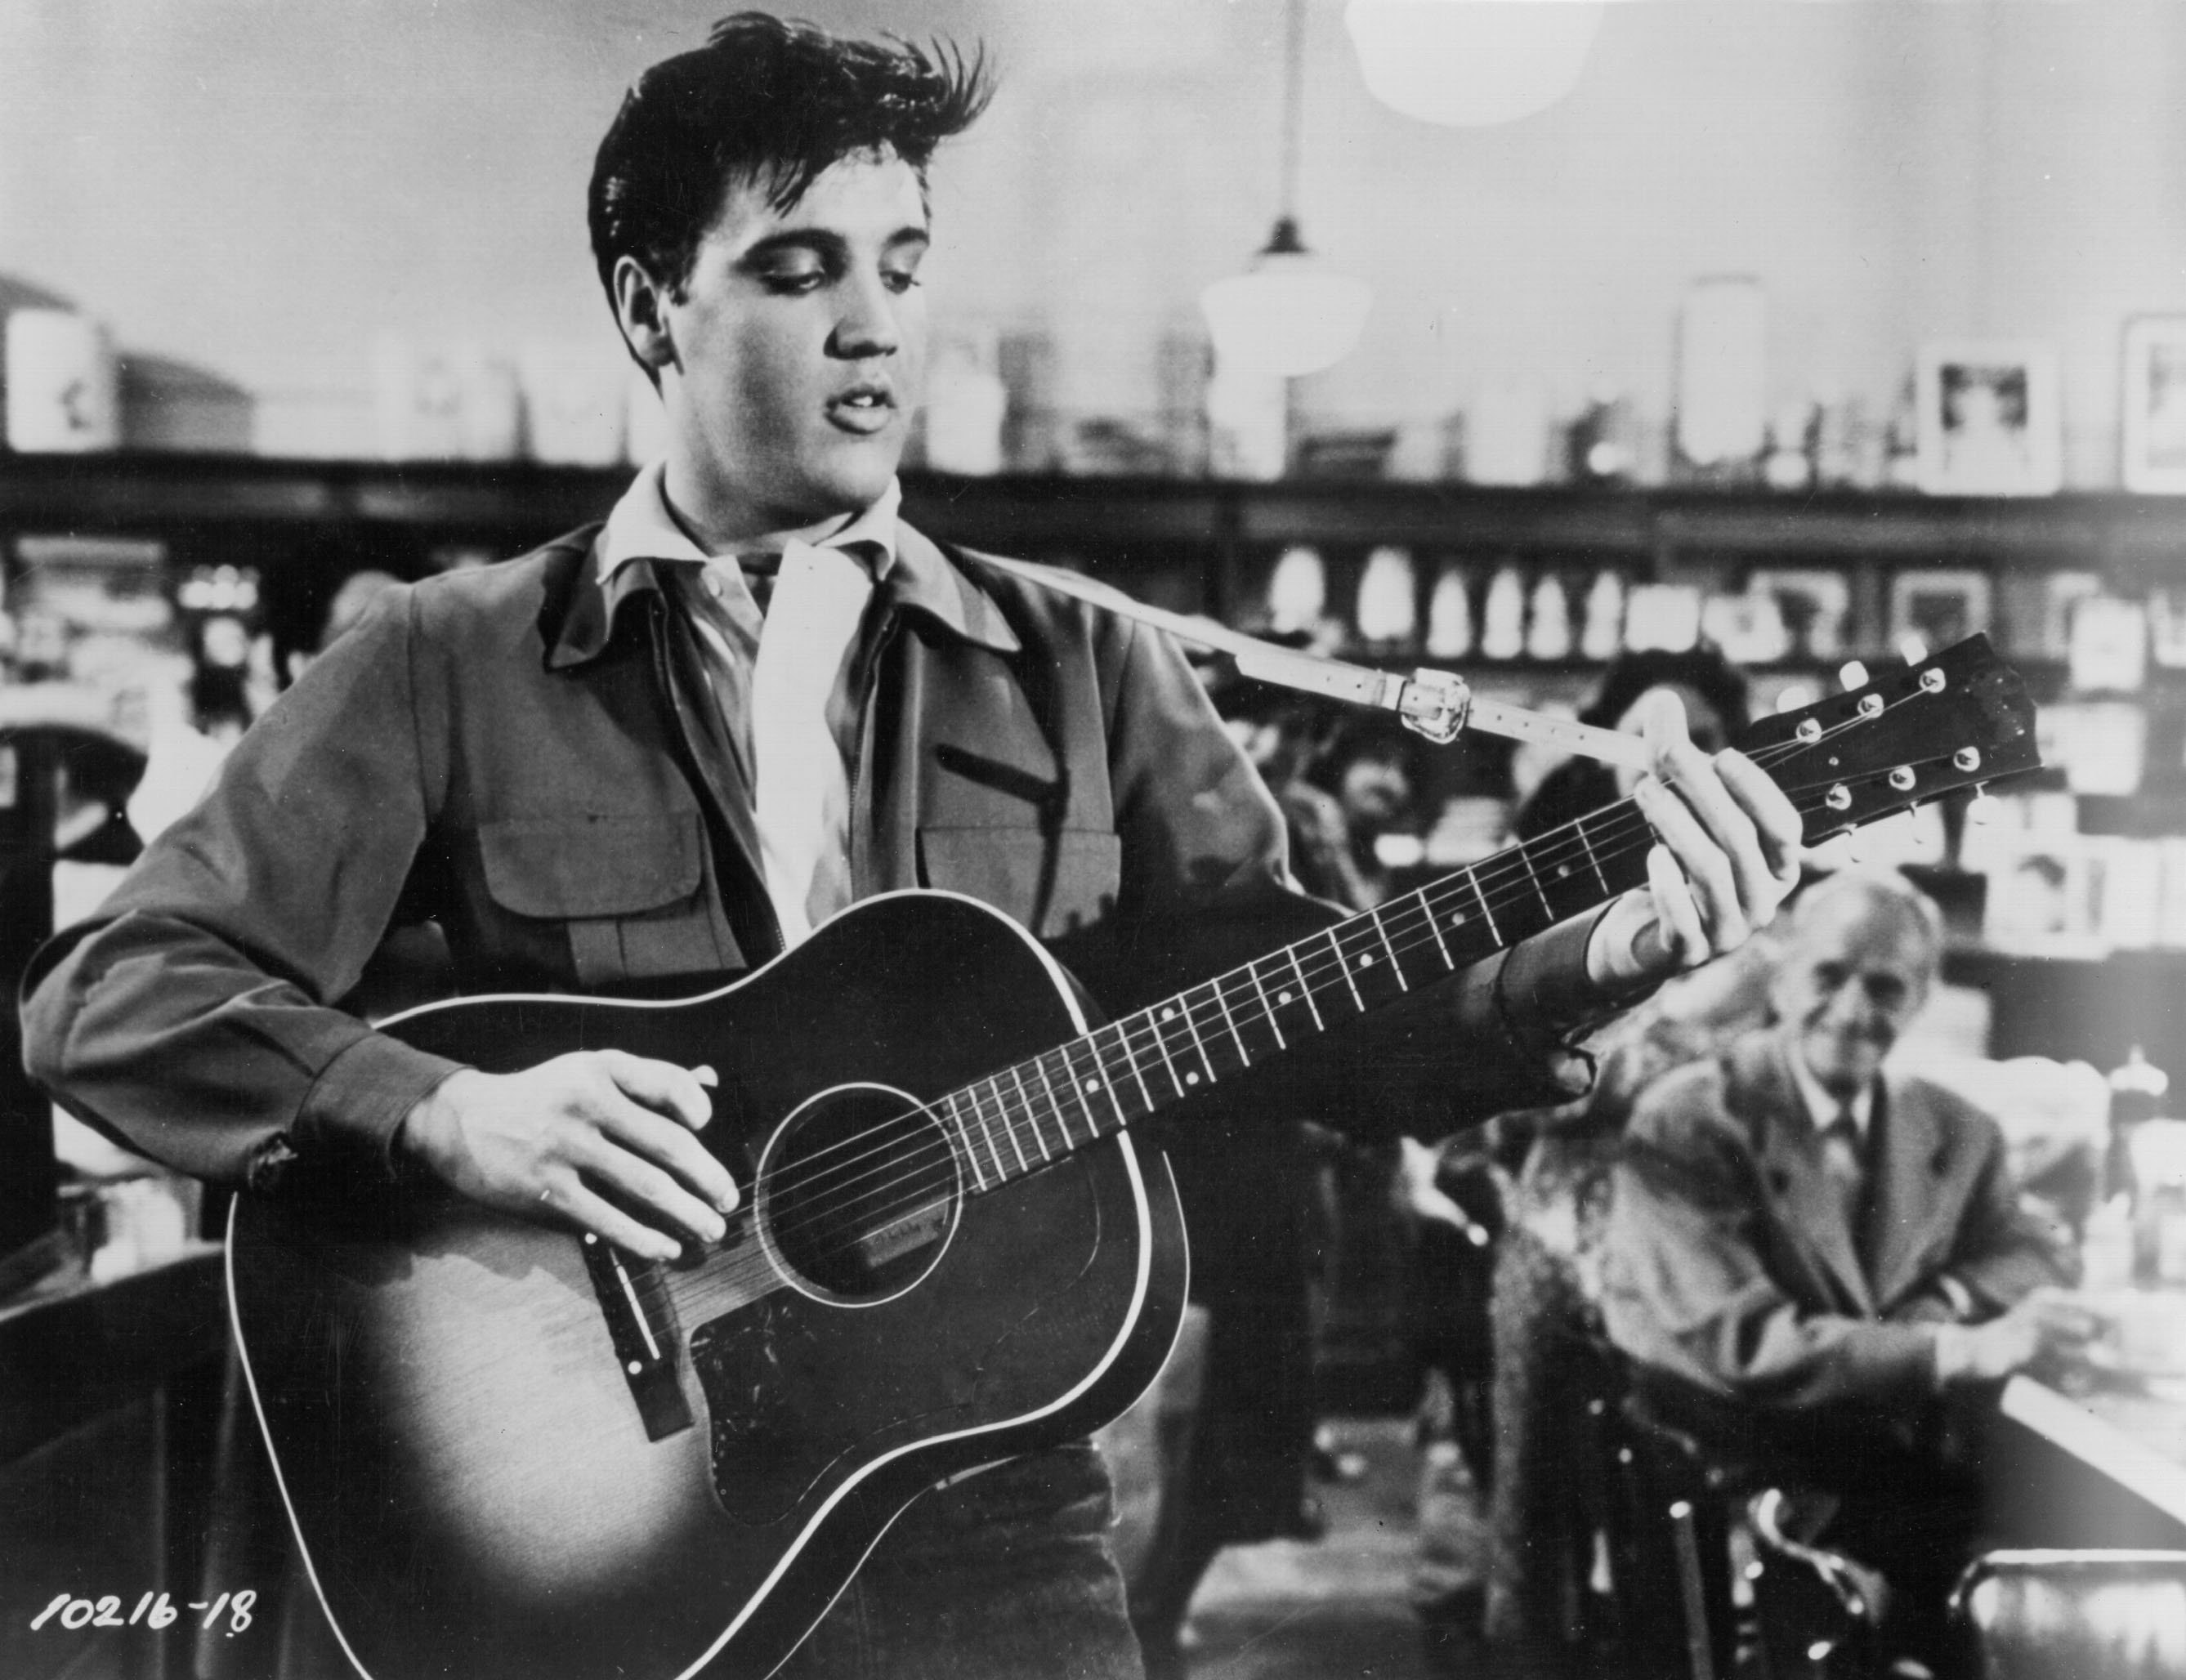 Elvis Presley with a guitar during the "Heartbreak Hotel" era